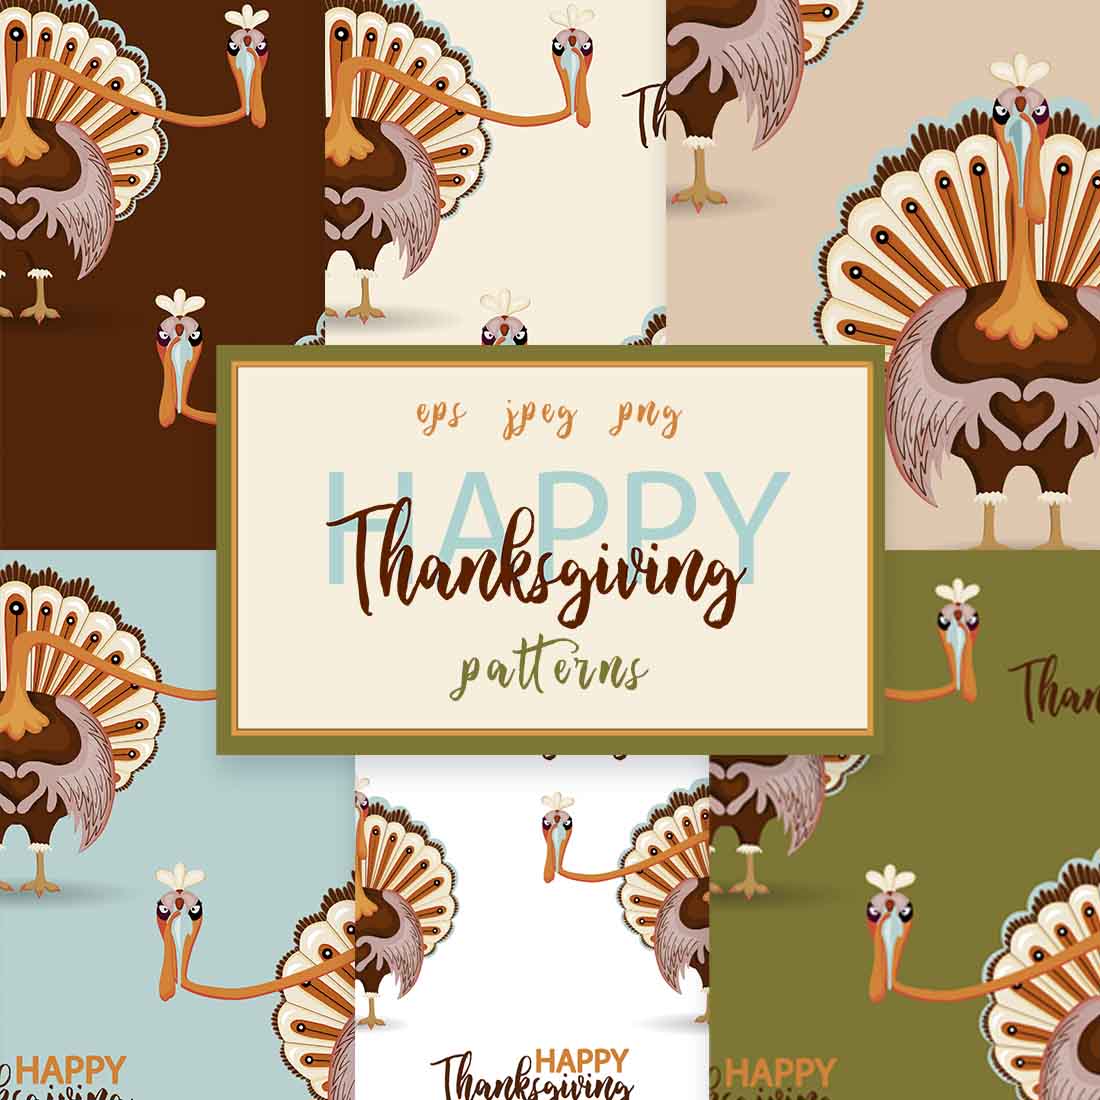 Thanksgiving Day Turkey Pattern Bundle cover image.